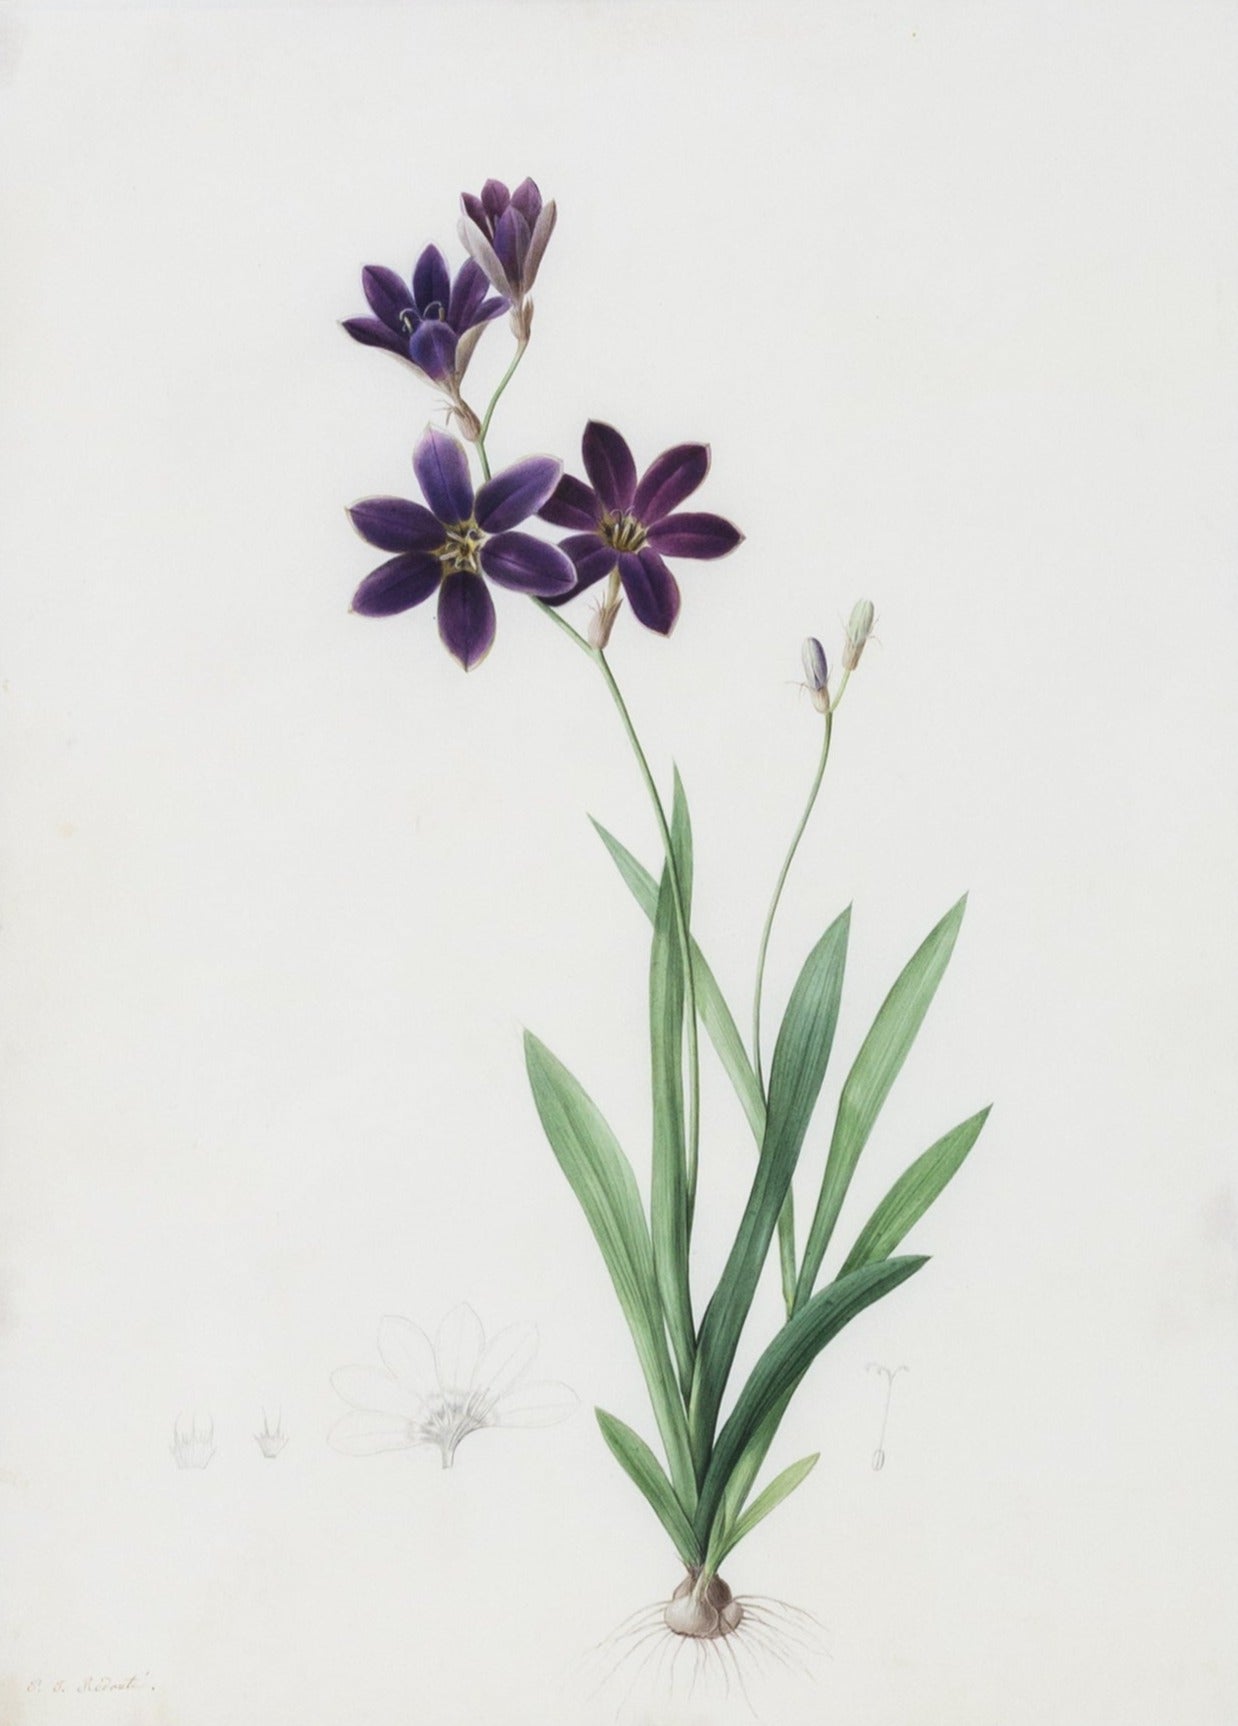 Redouté, Pierre-Joseph. "Large-flowered Sparaxis". Prepared for Les Liliacées, ca. 1802-1816.